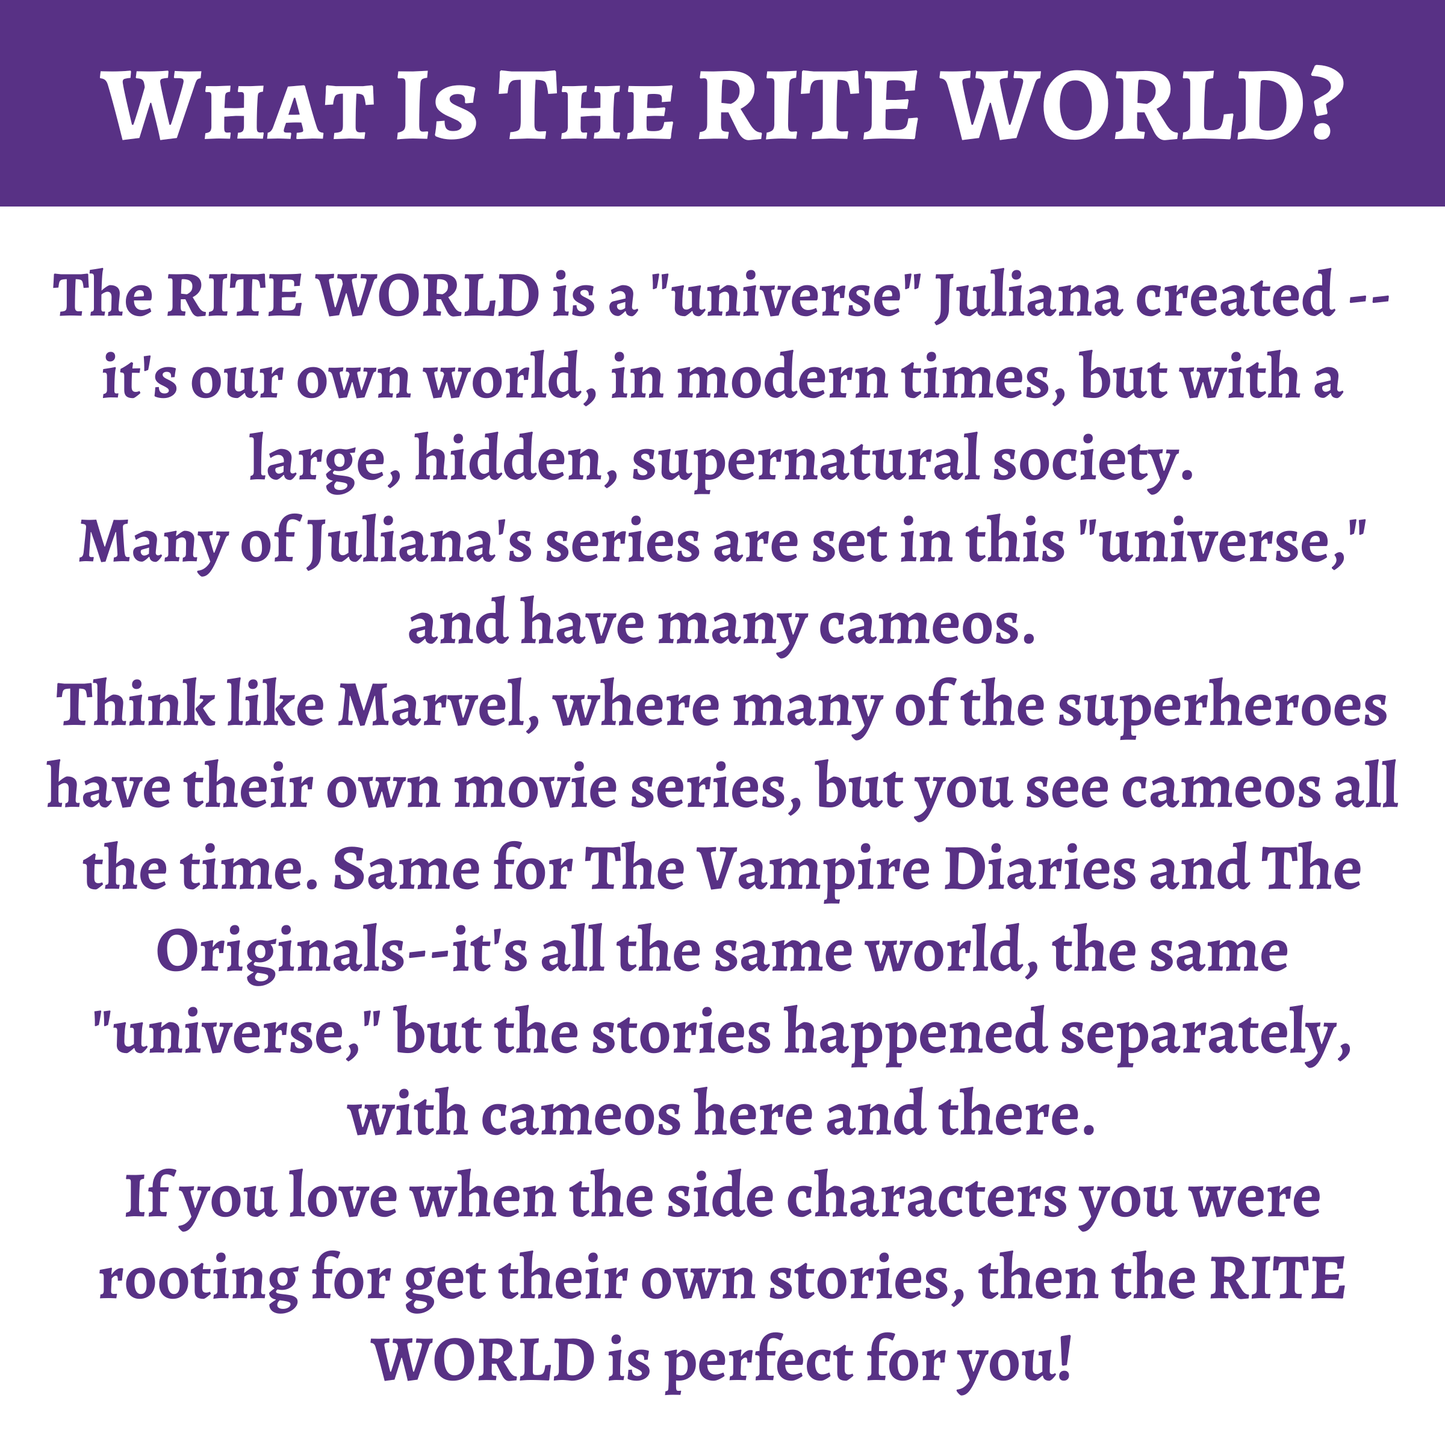 Rite World: Night Wolves Series Book Bundle